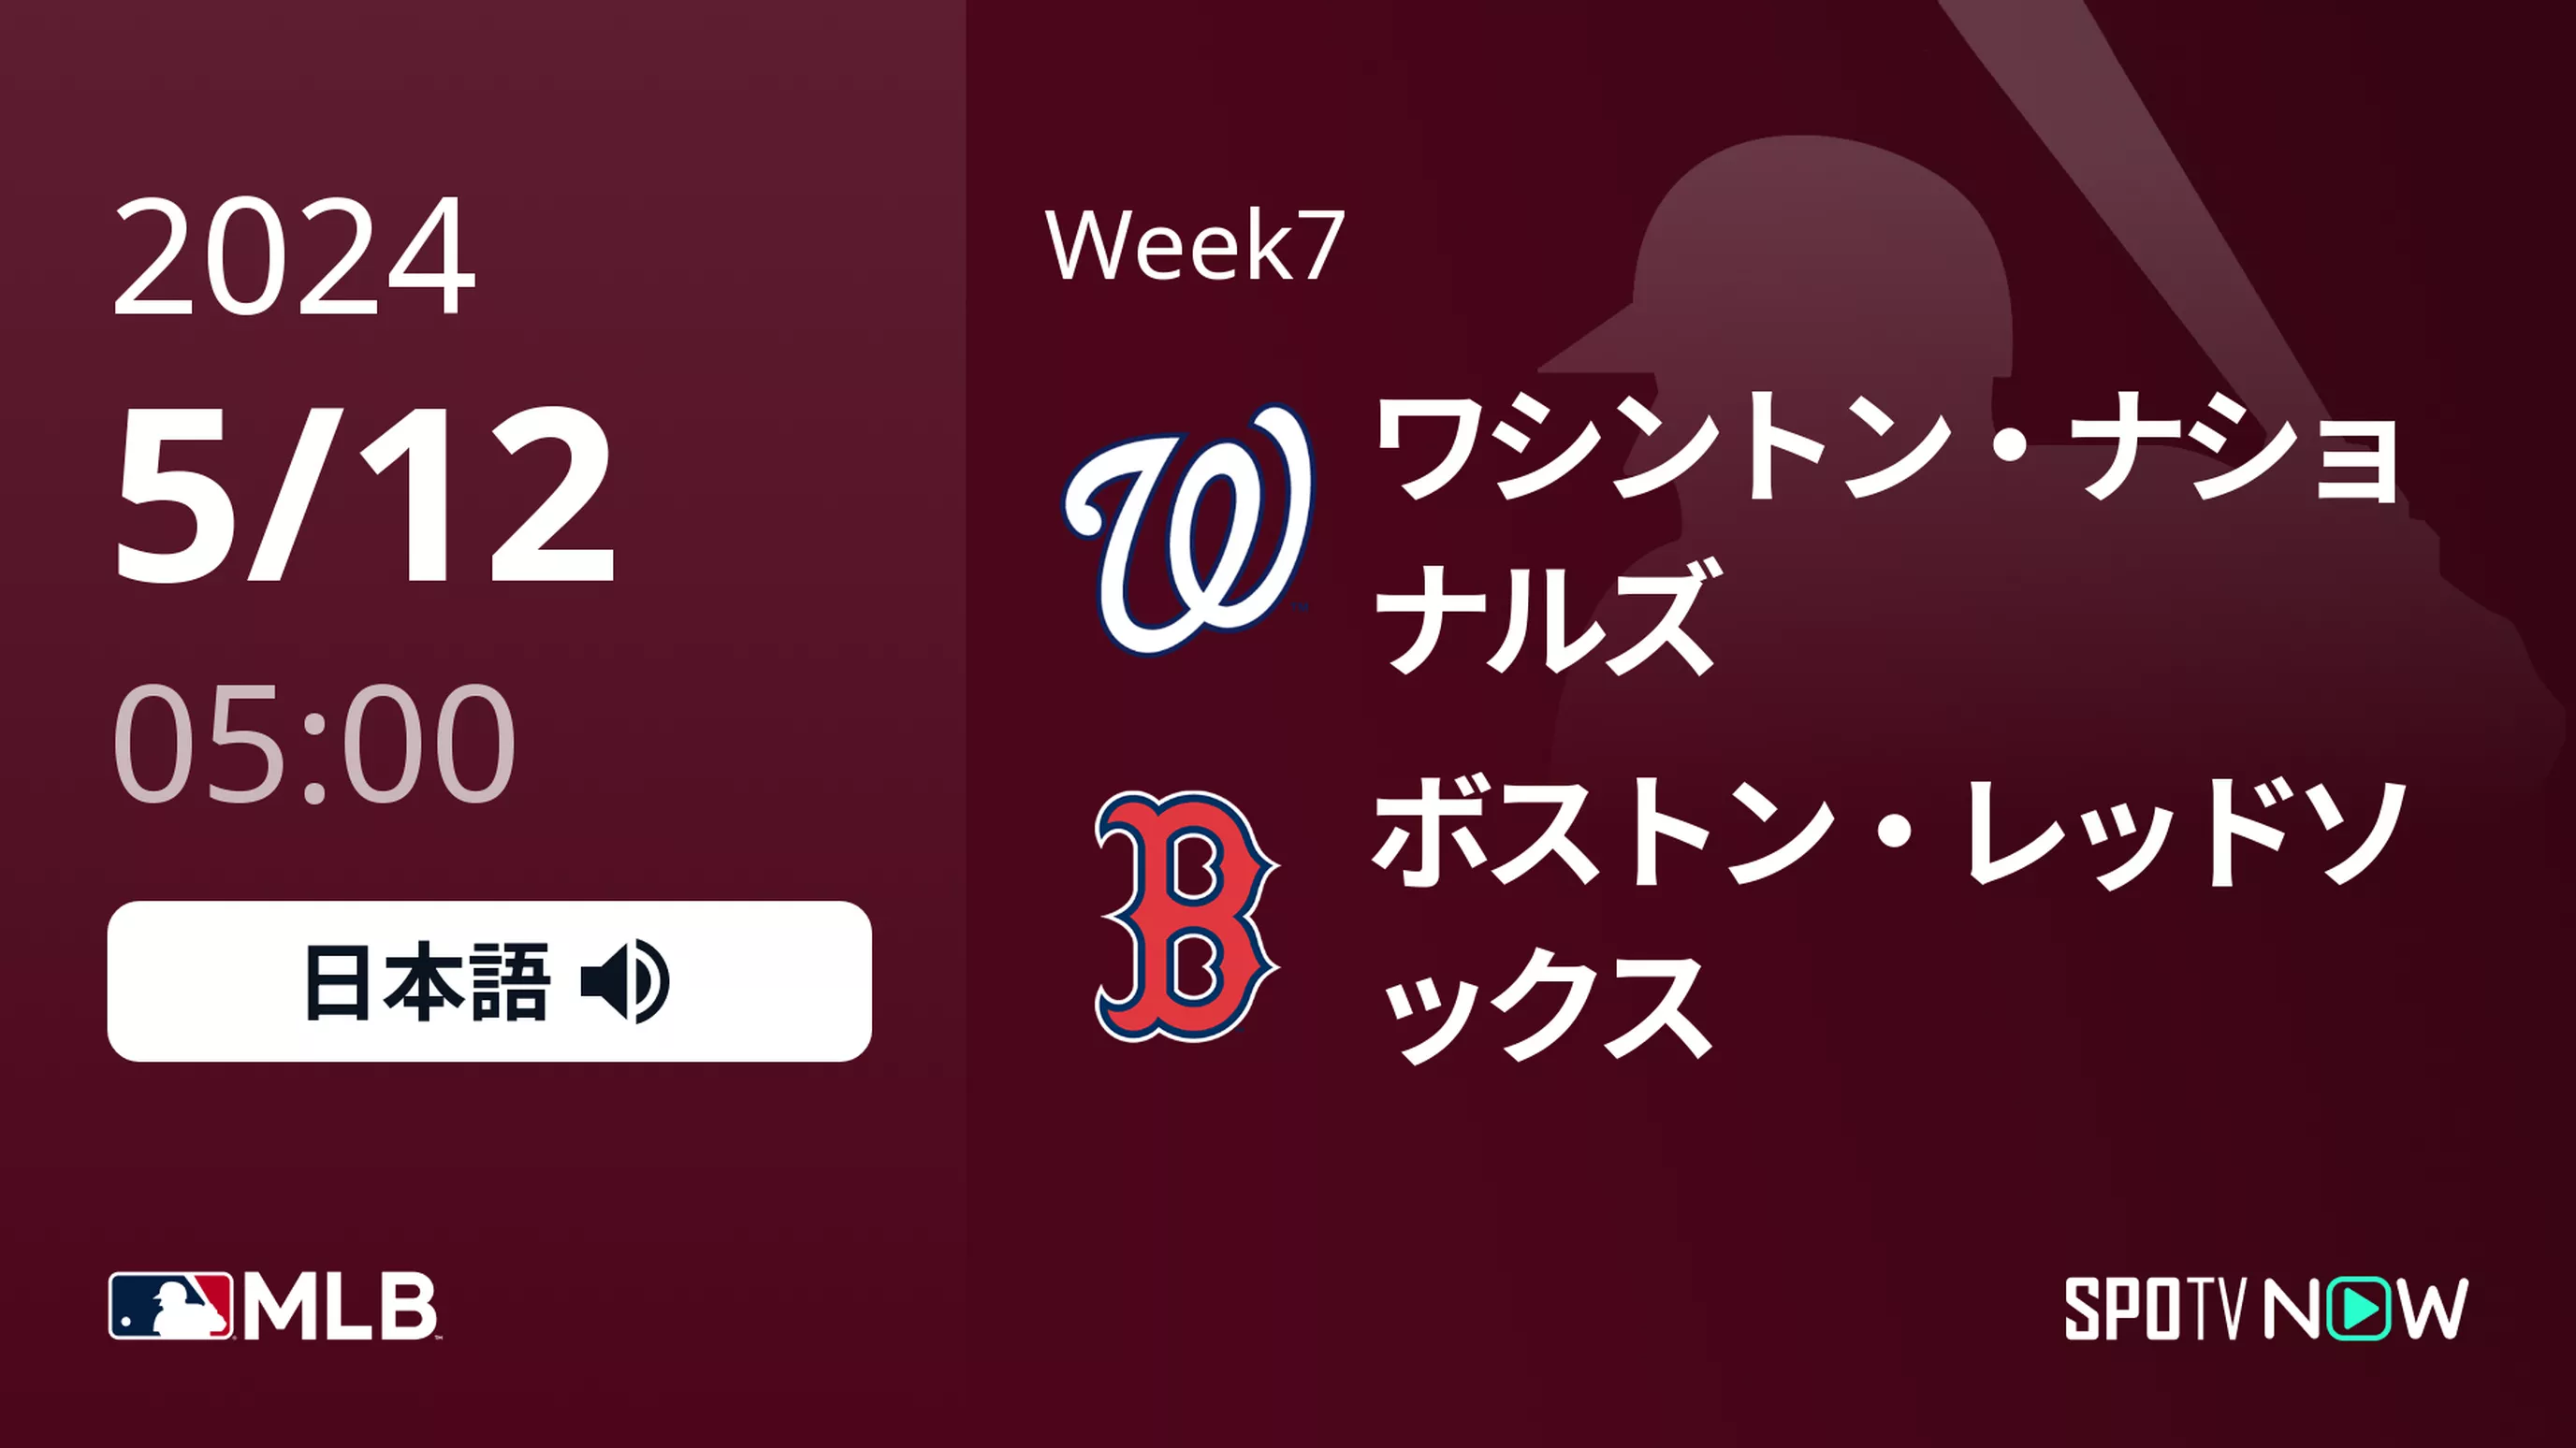 Week7 ナショナルズ vs Rソックス 5/12[MLB]